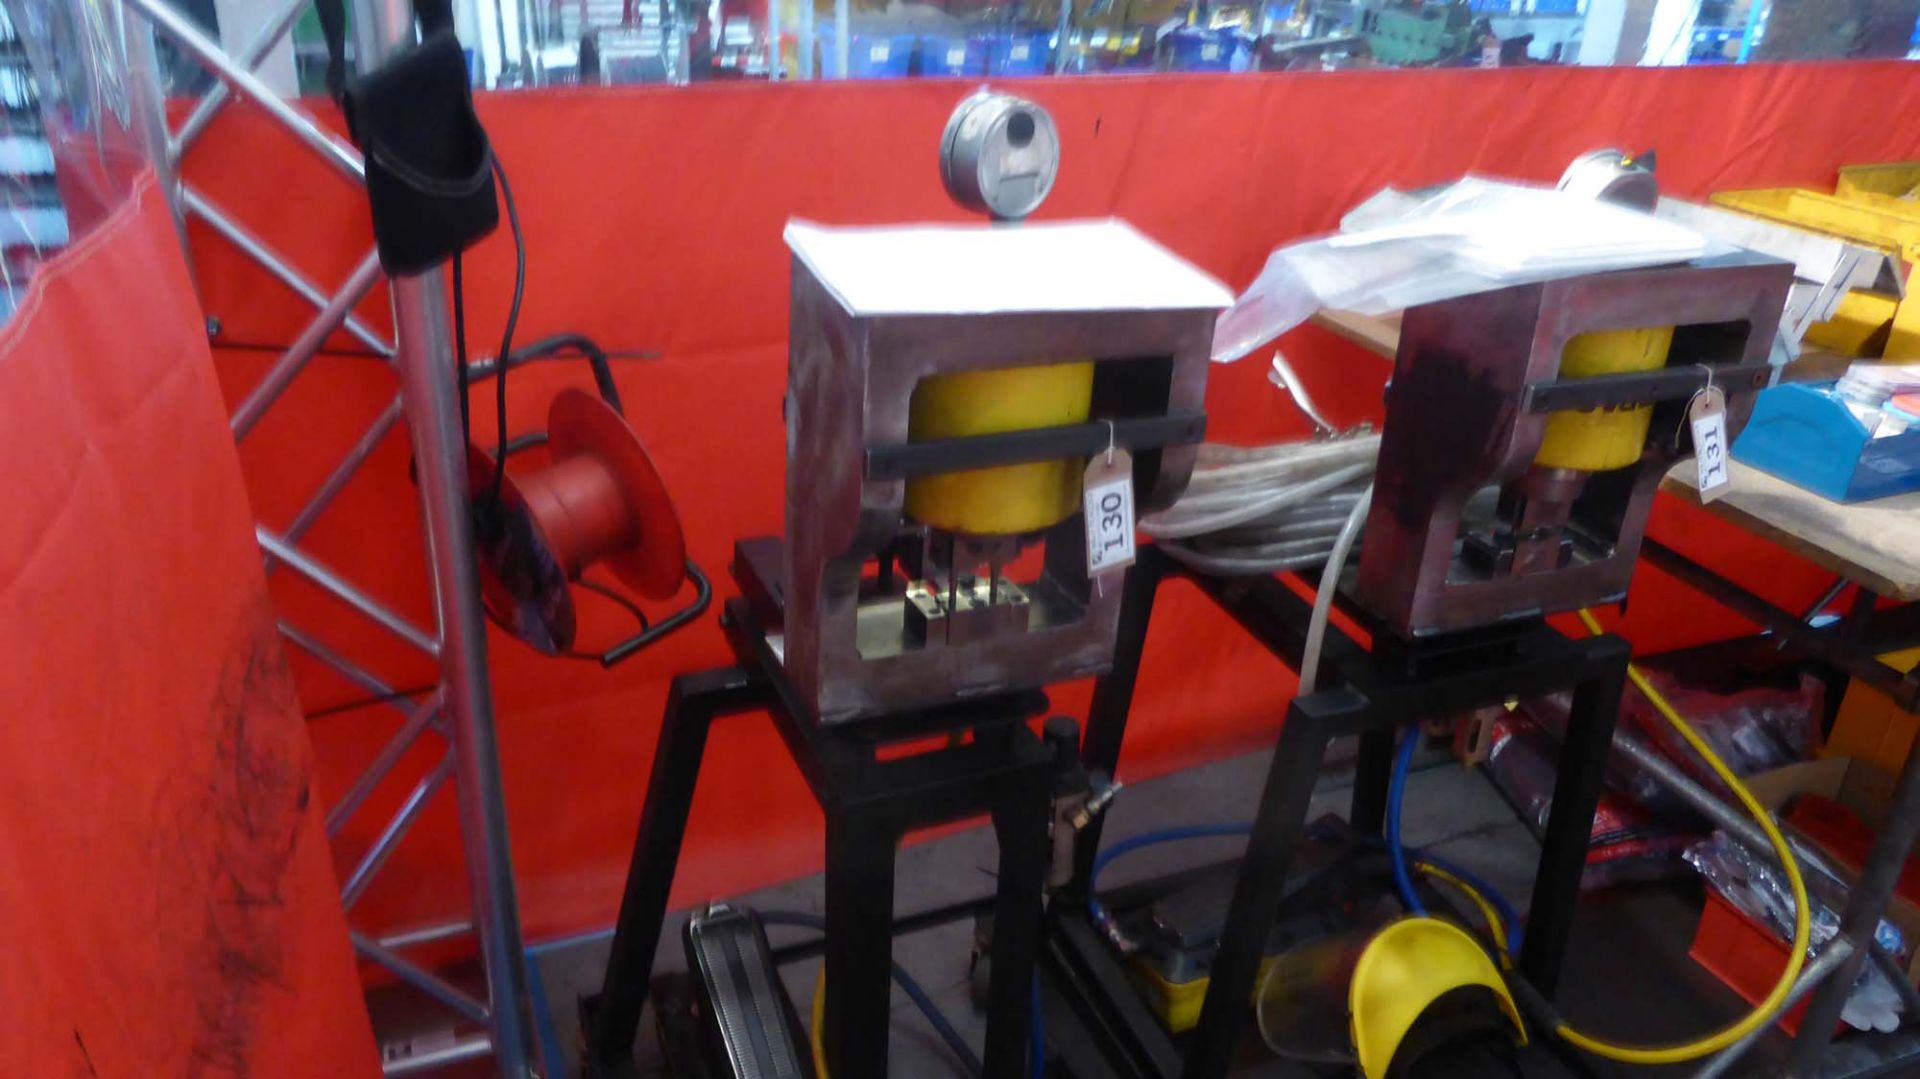 Specialist Enerpac 100 tonnes capacaity manual pneumatic crimping press with treadle control